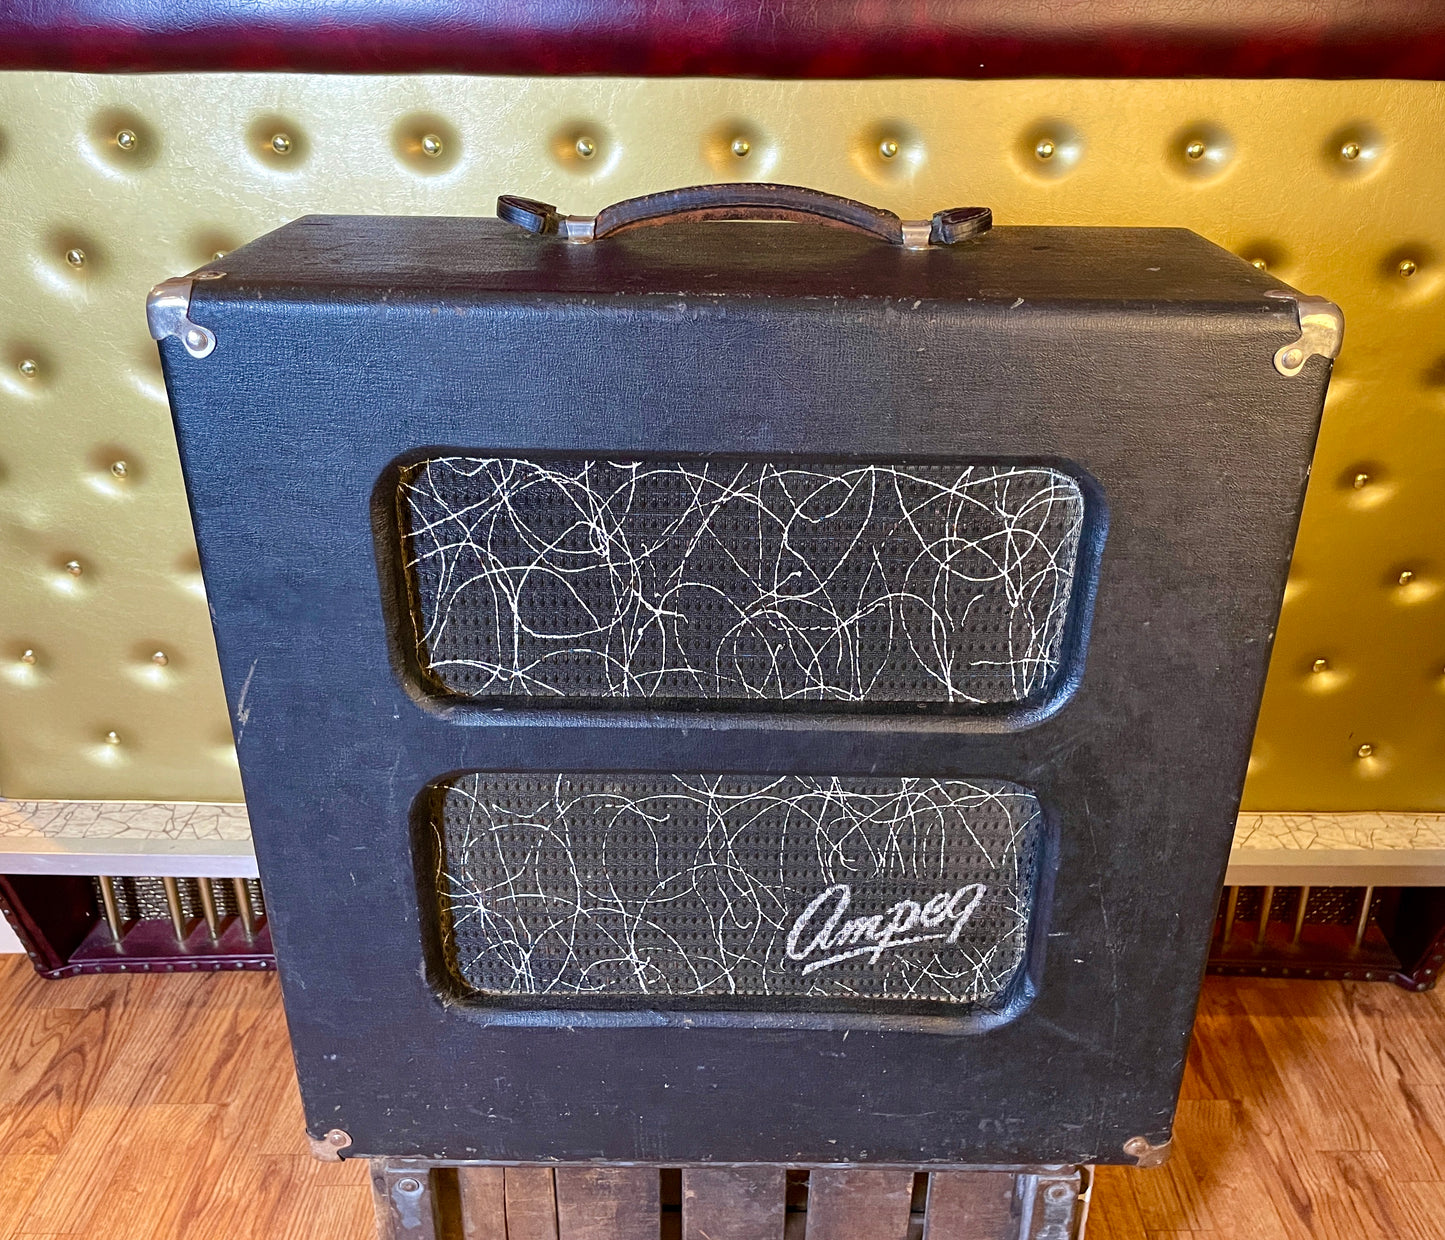 Early 1957 Ampeg Model 825 Bassamp Combo Bass Amplifier